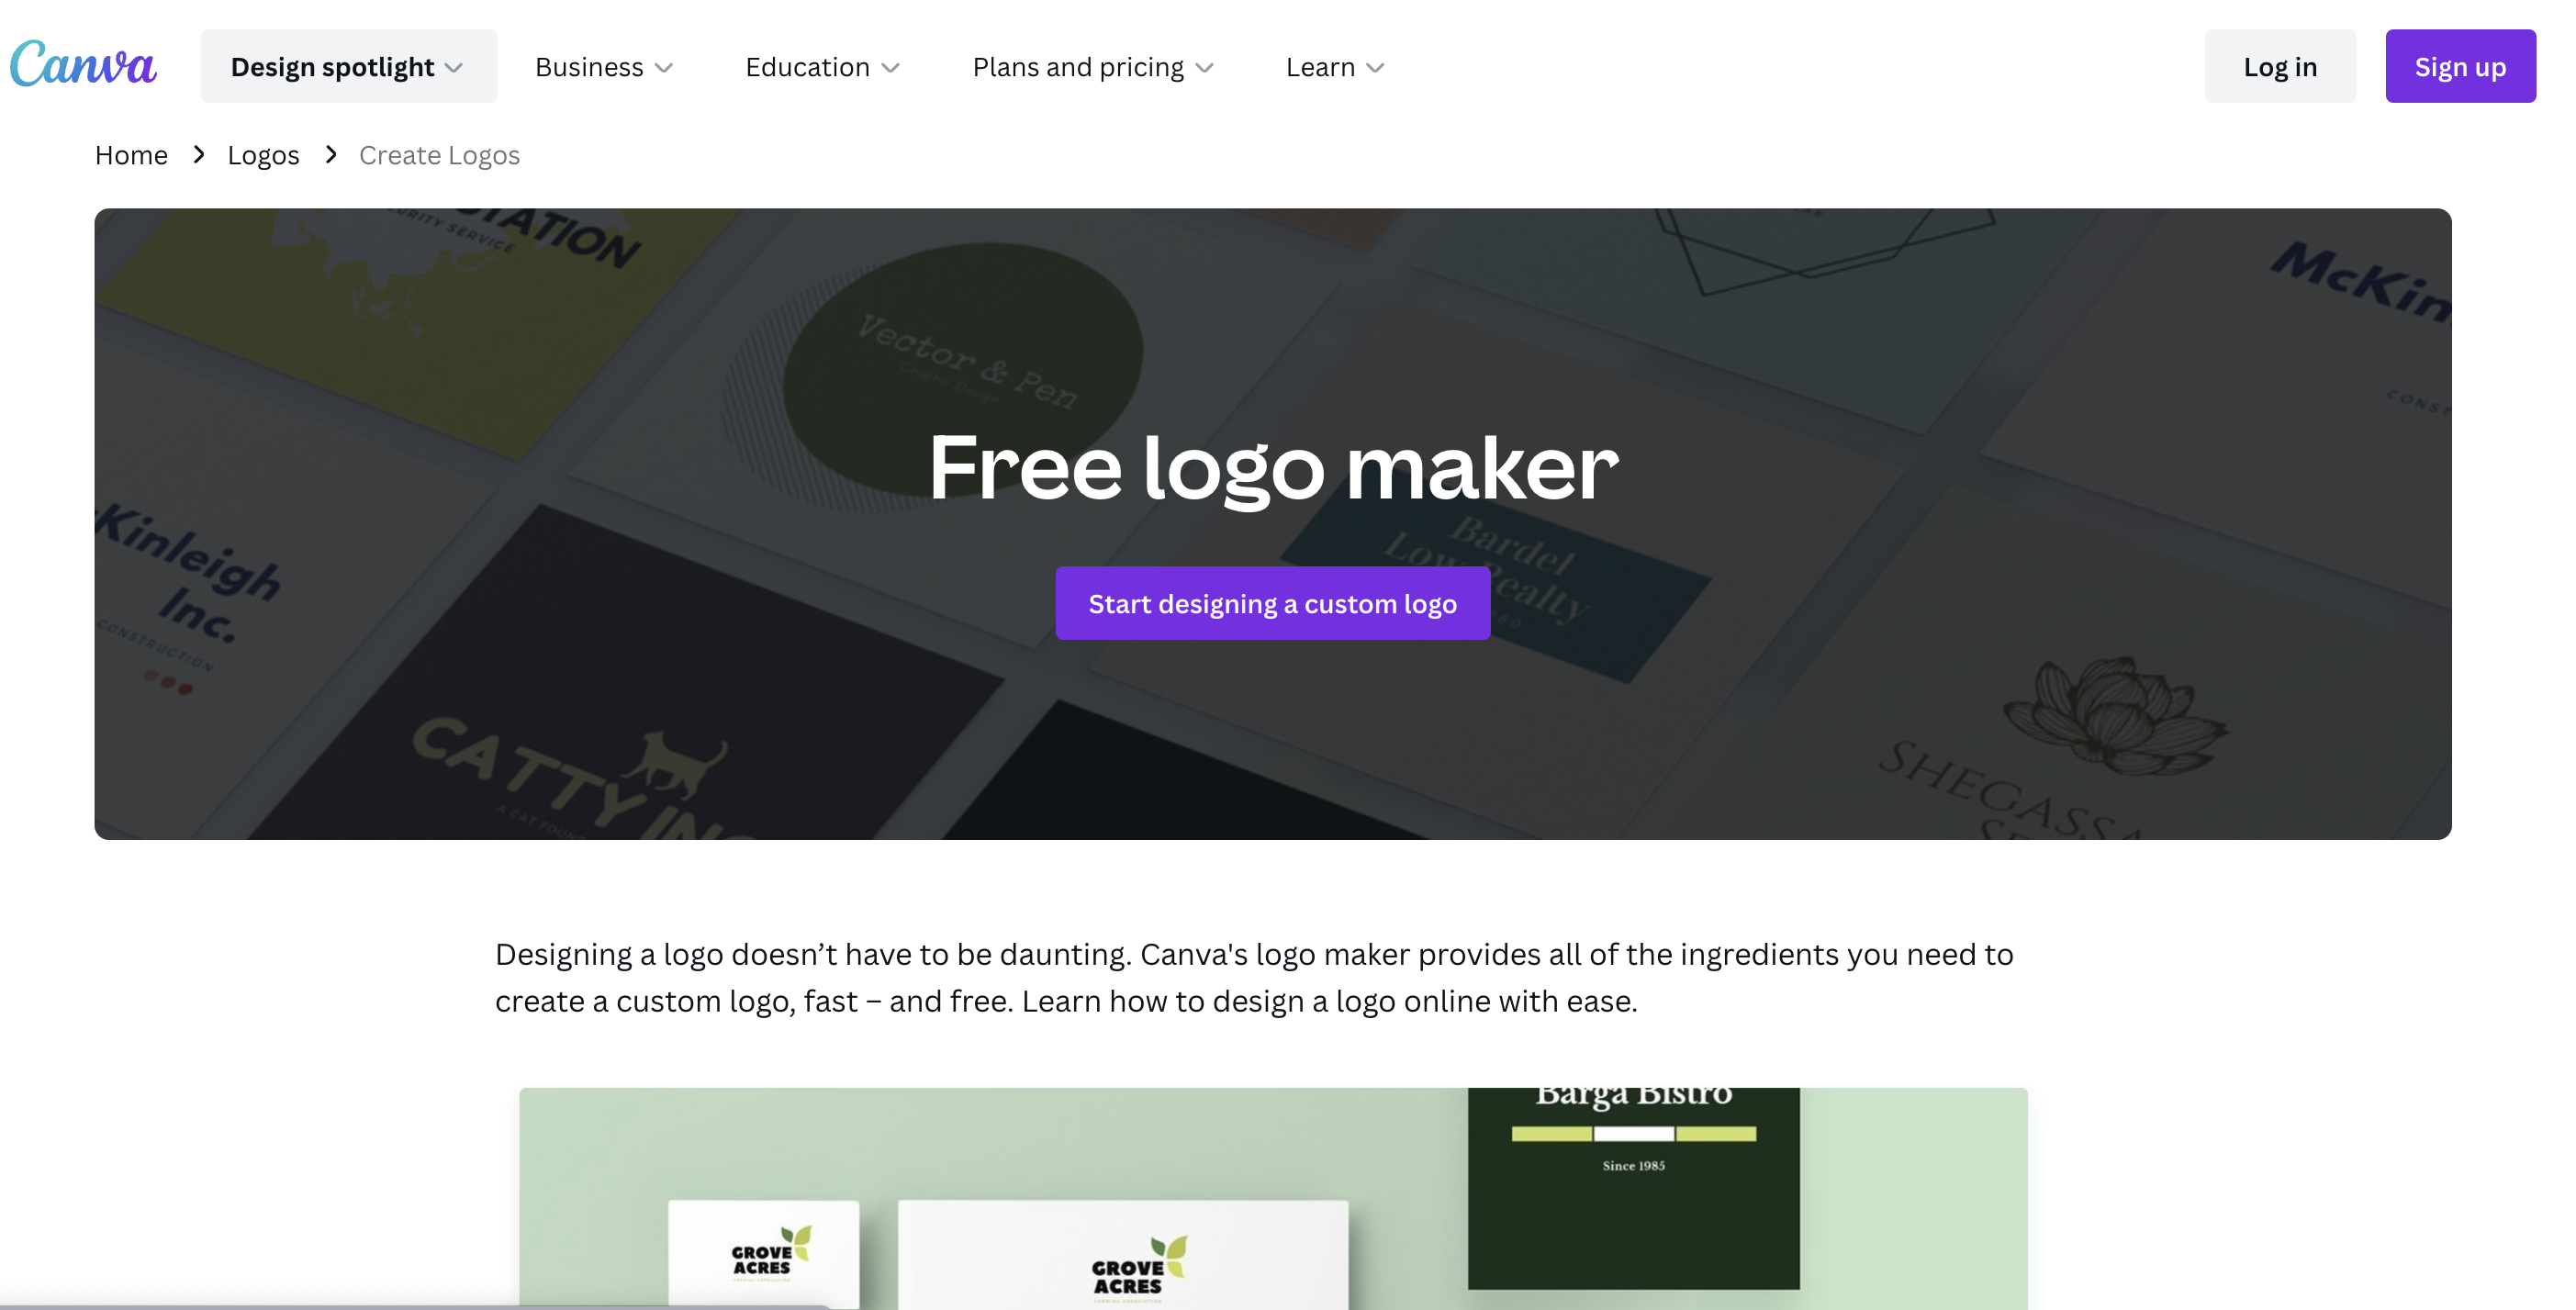 Free logo maker for companies